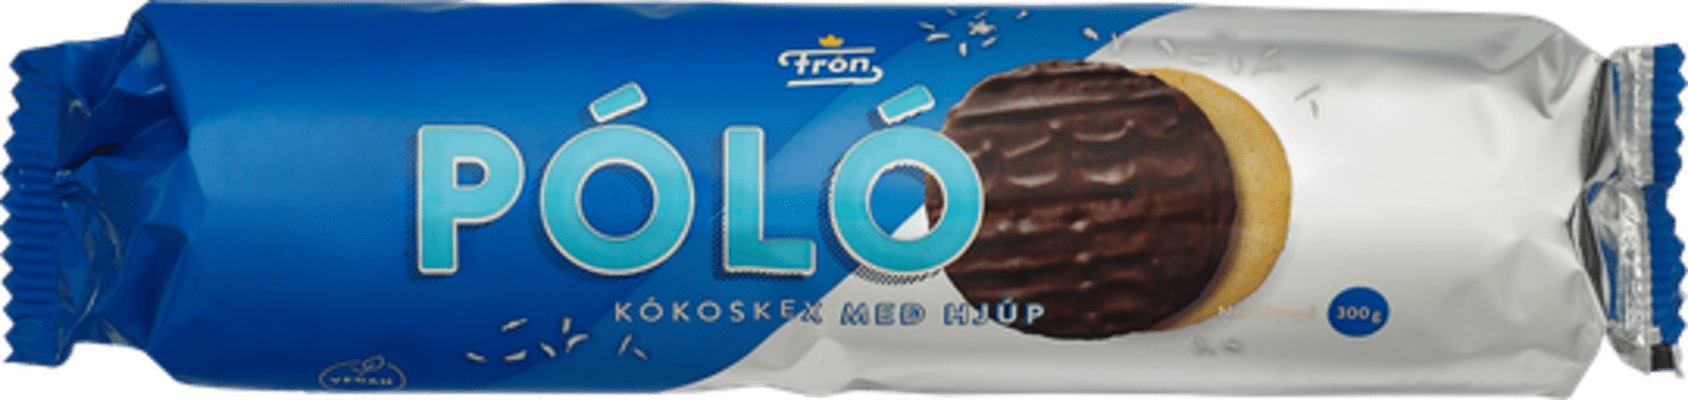 Póló súkkulaðikex Frón 30x250g